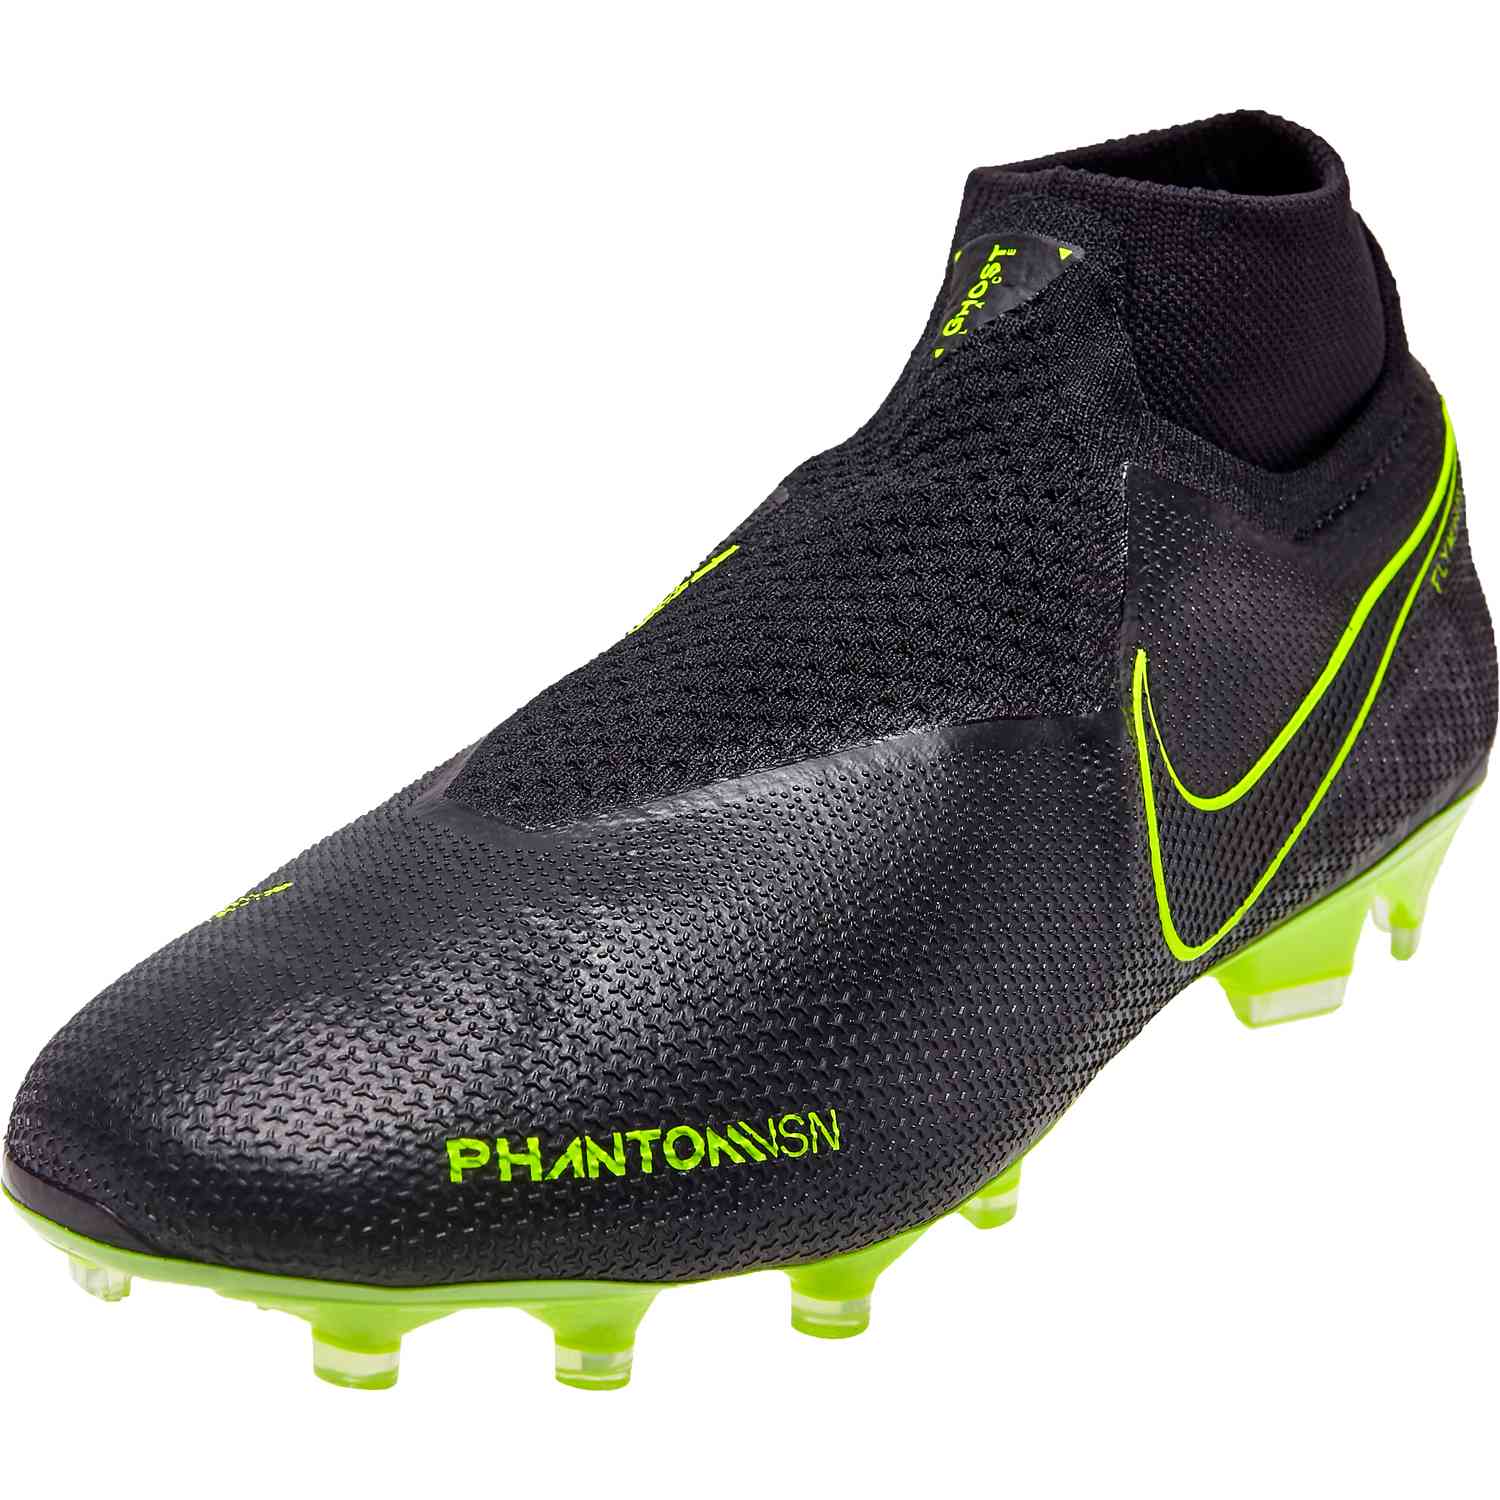 Nike Phantom Vision Elite FG - Under the Radar - SoccerPro